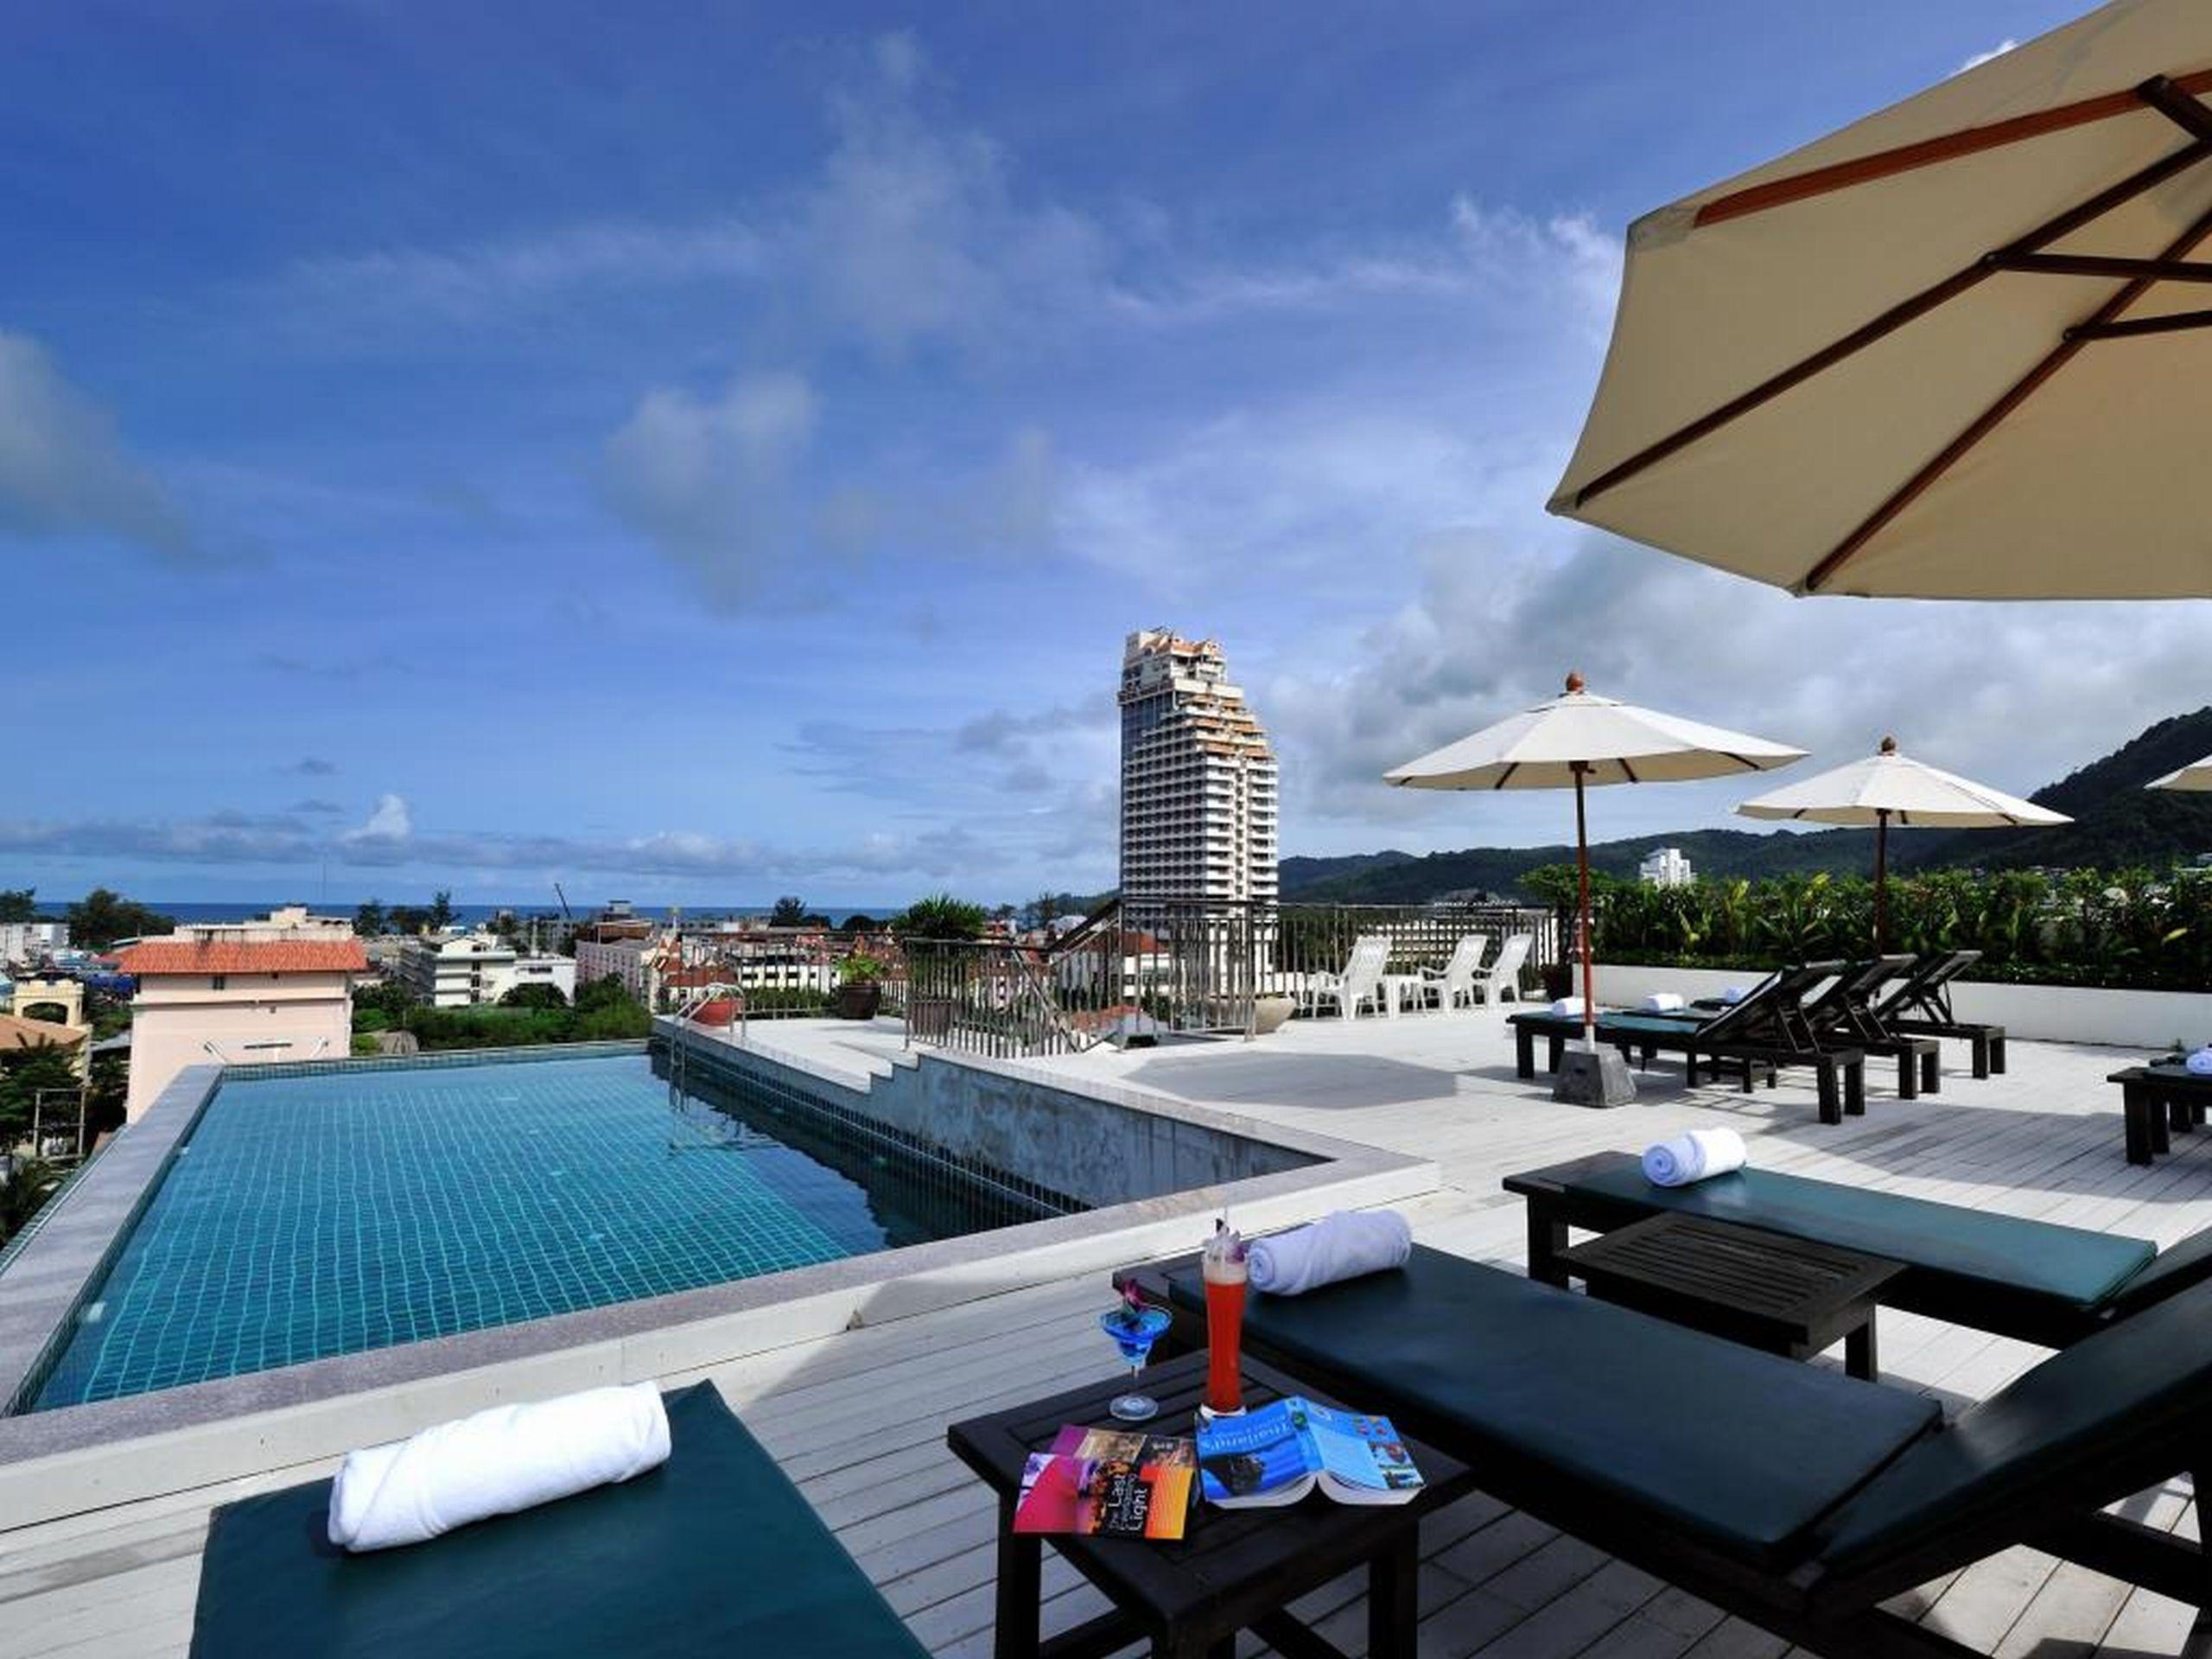 Apk Resort And Spa Phuket Exterior photo